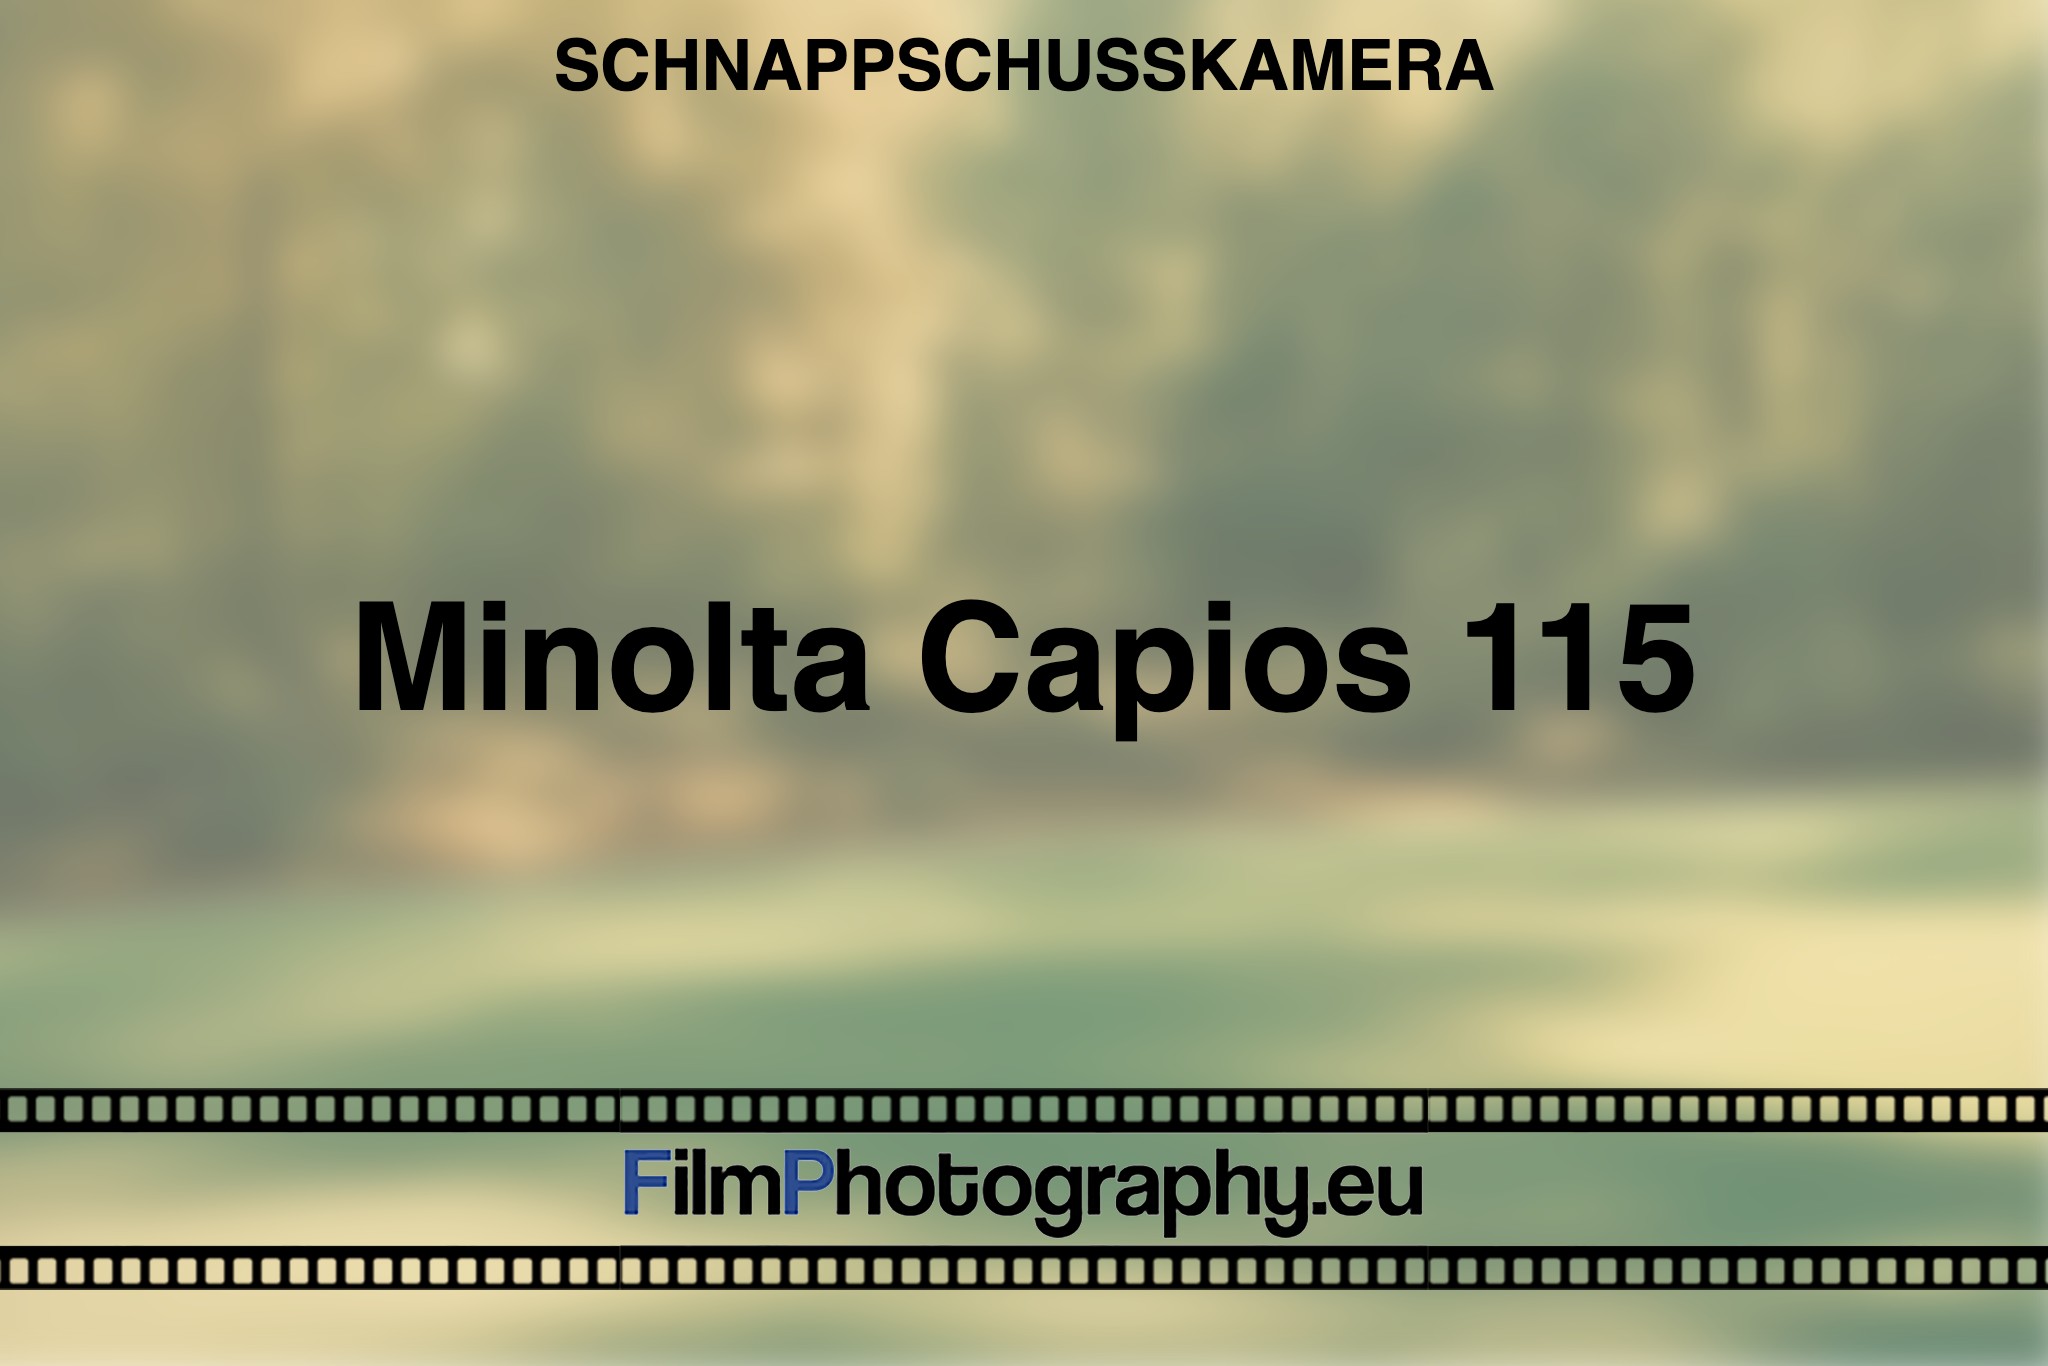 minolta-capios-115-schnappschusskamera-bnv